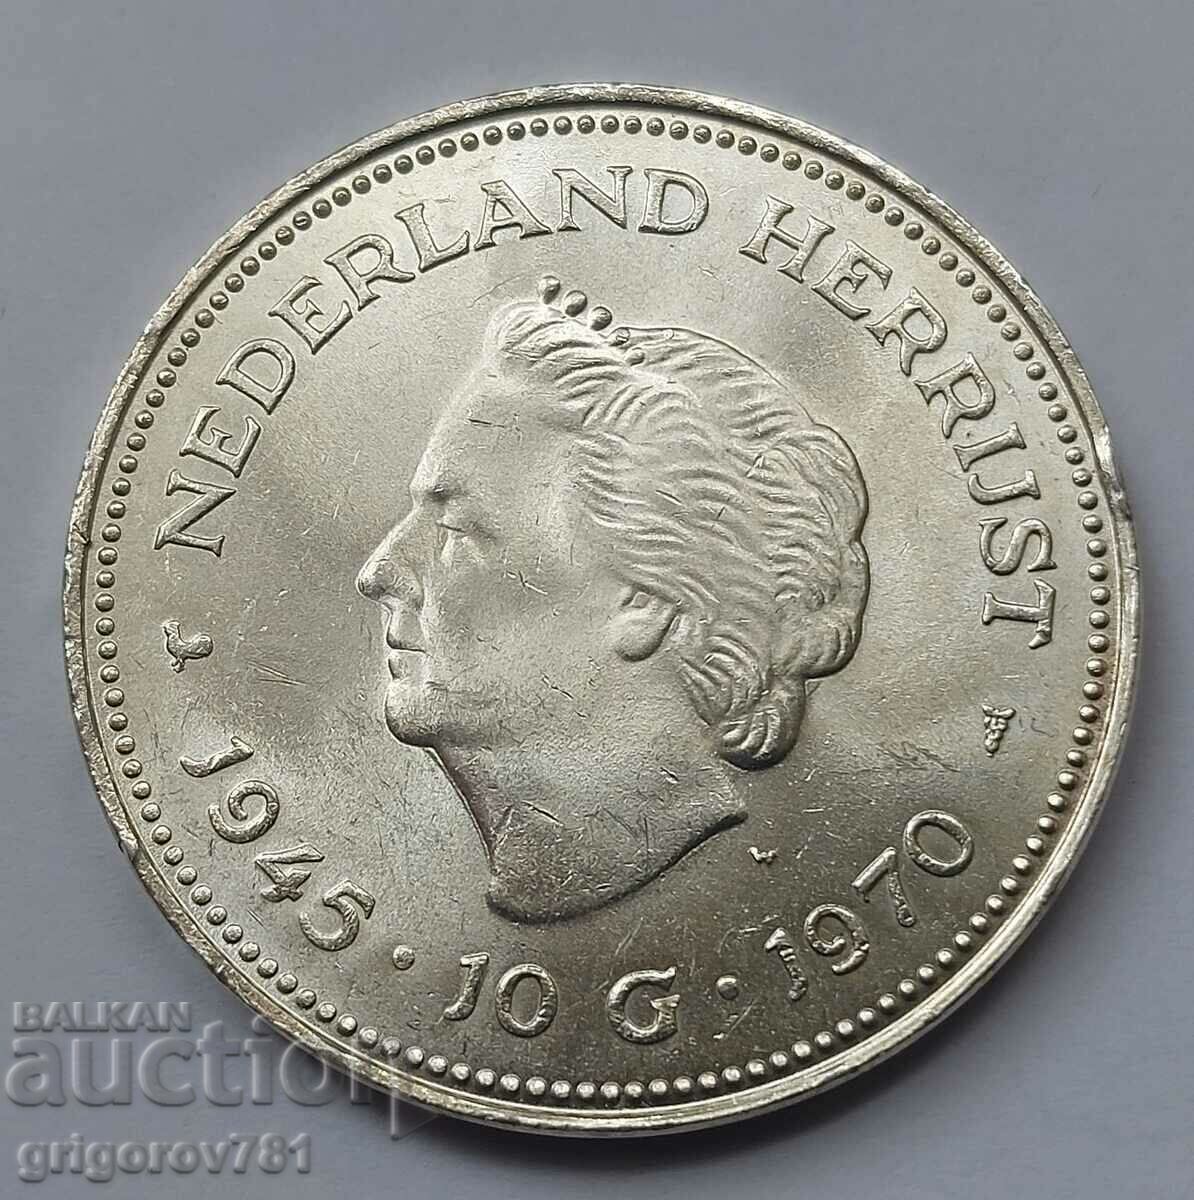 10 Guilder Silver Netherlands 1970 - Silver Coin #4